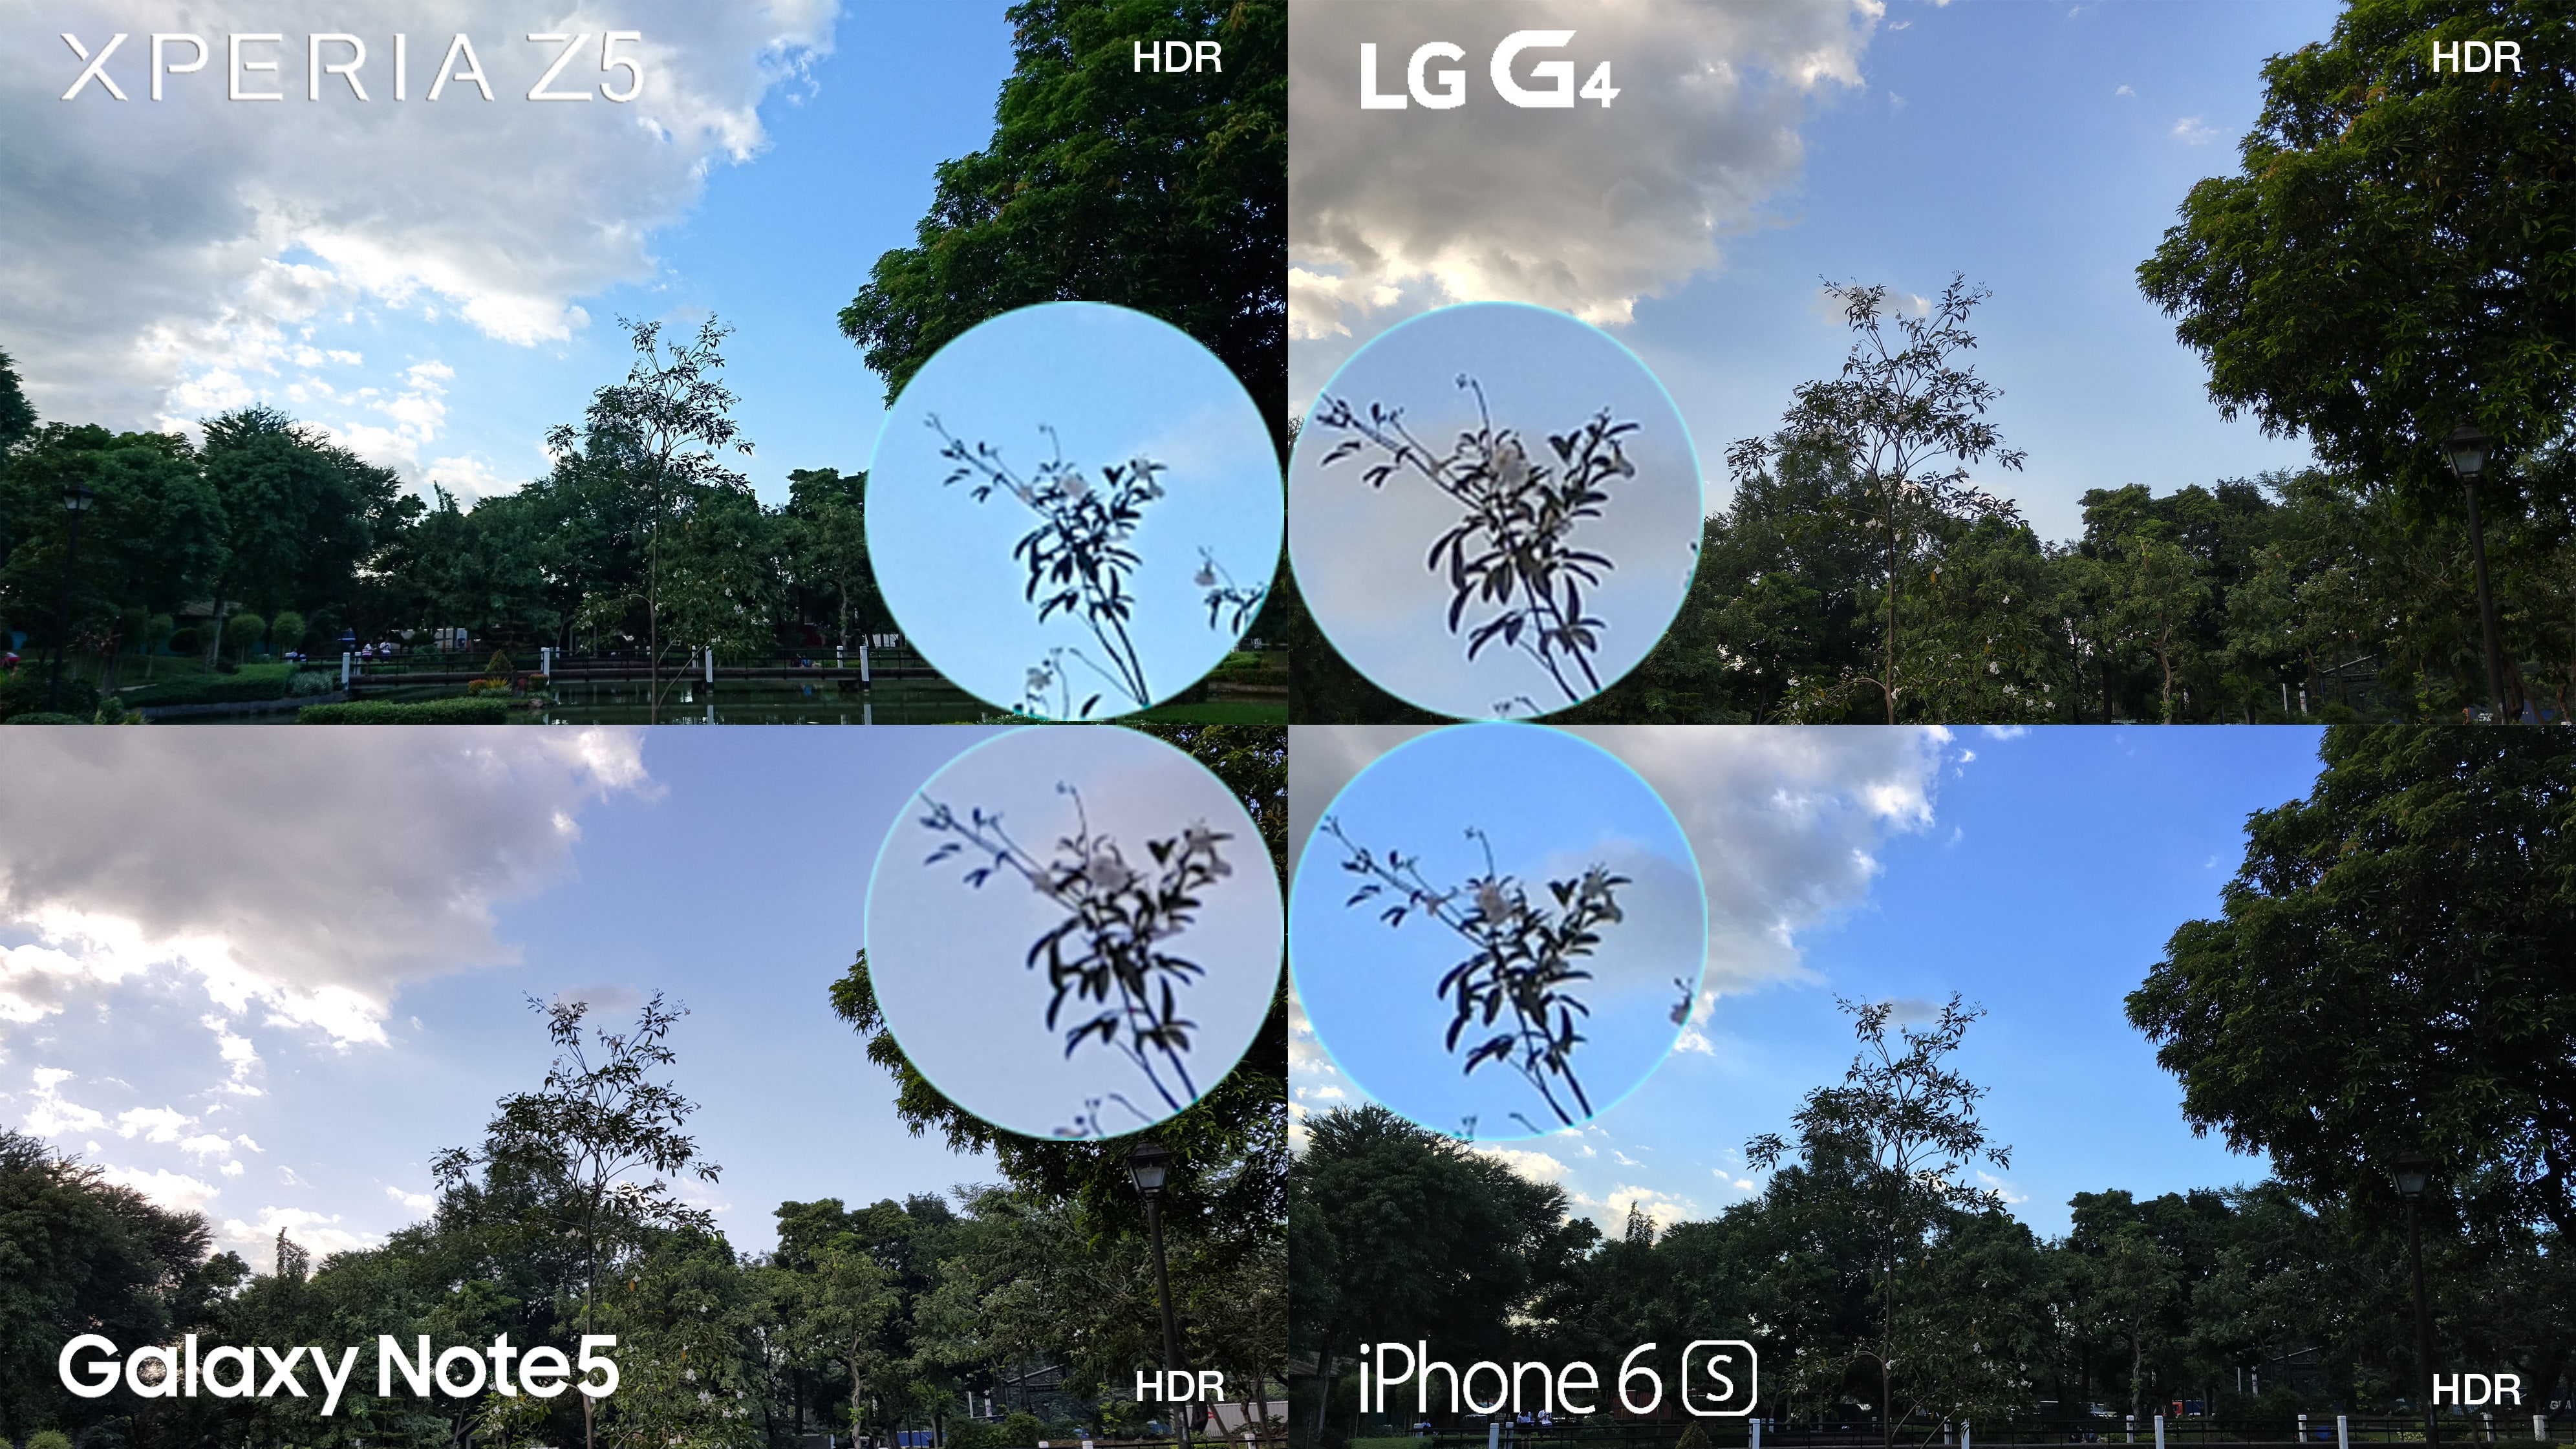 xperia-z5-lg-g4-iphone-6s-galaxy-note-5-camera-review-comparison11-min